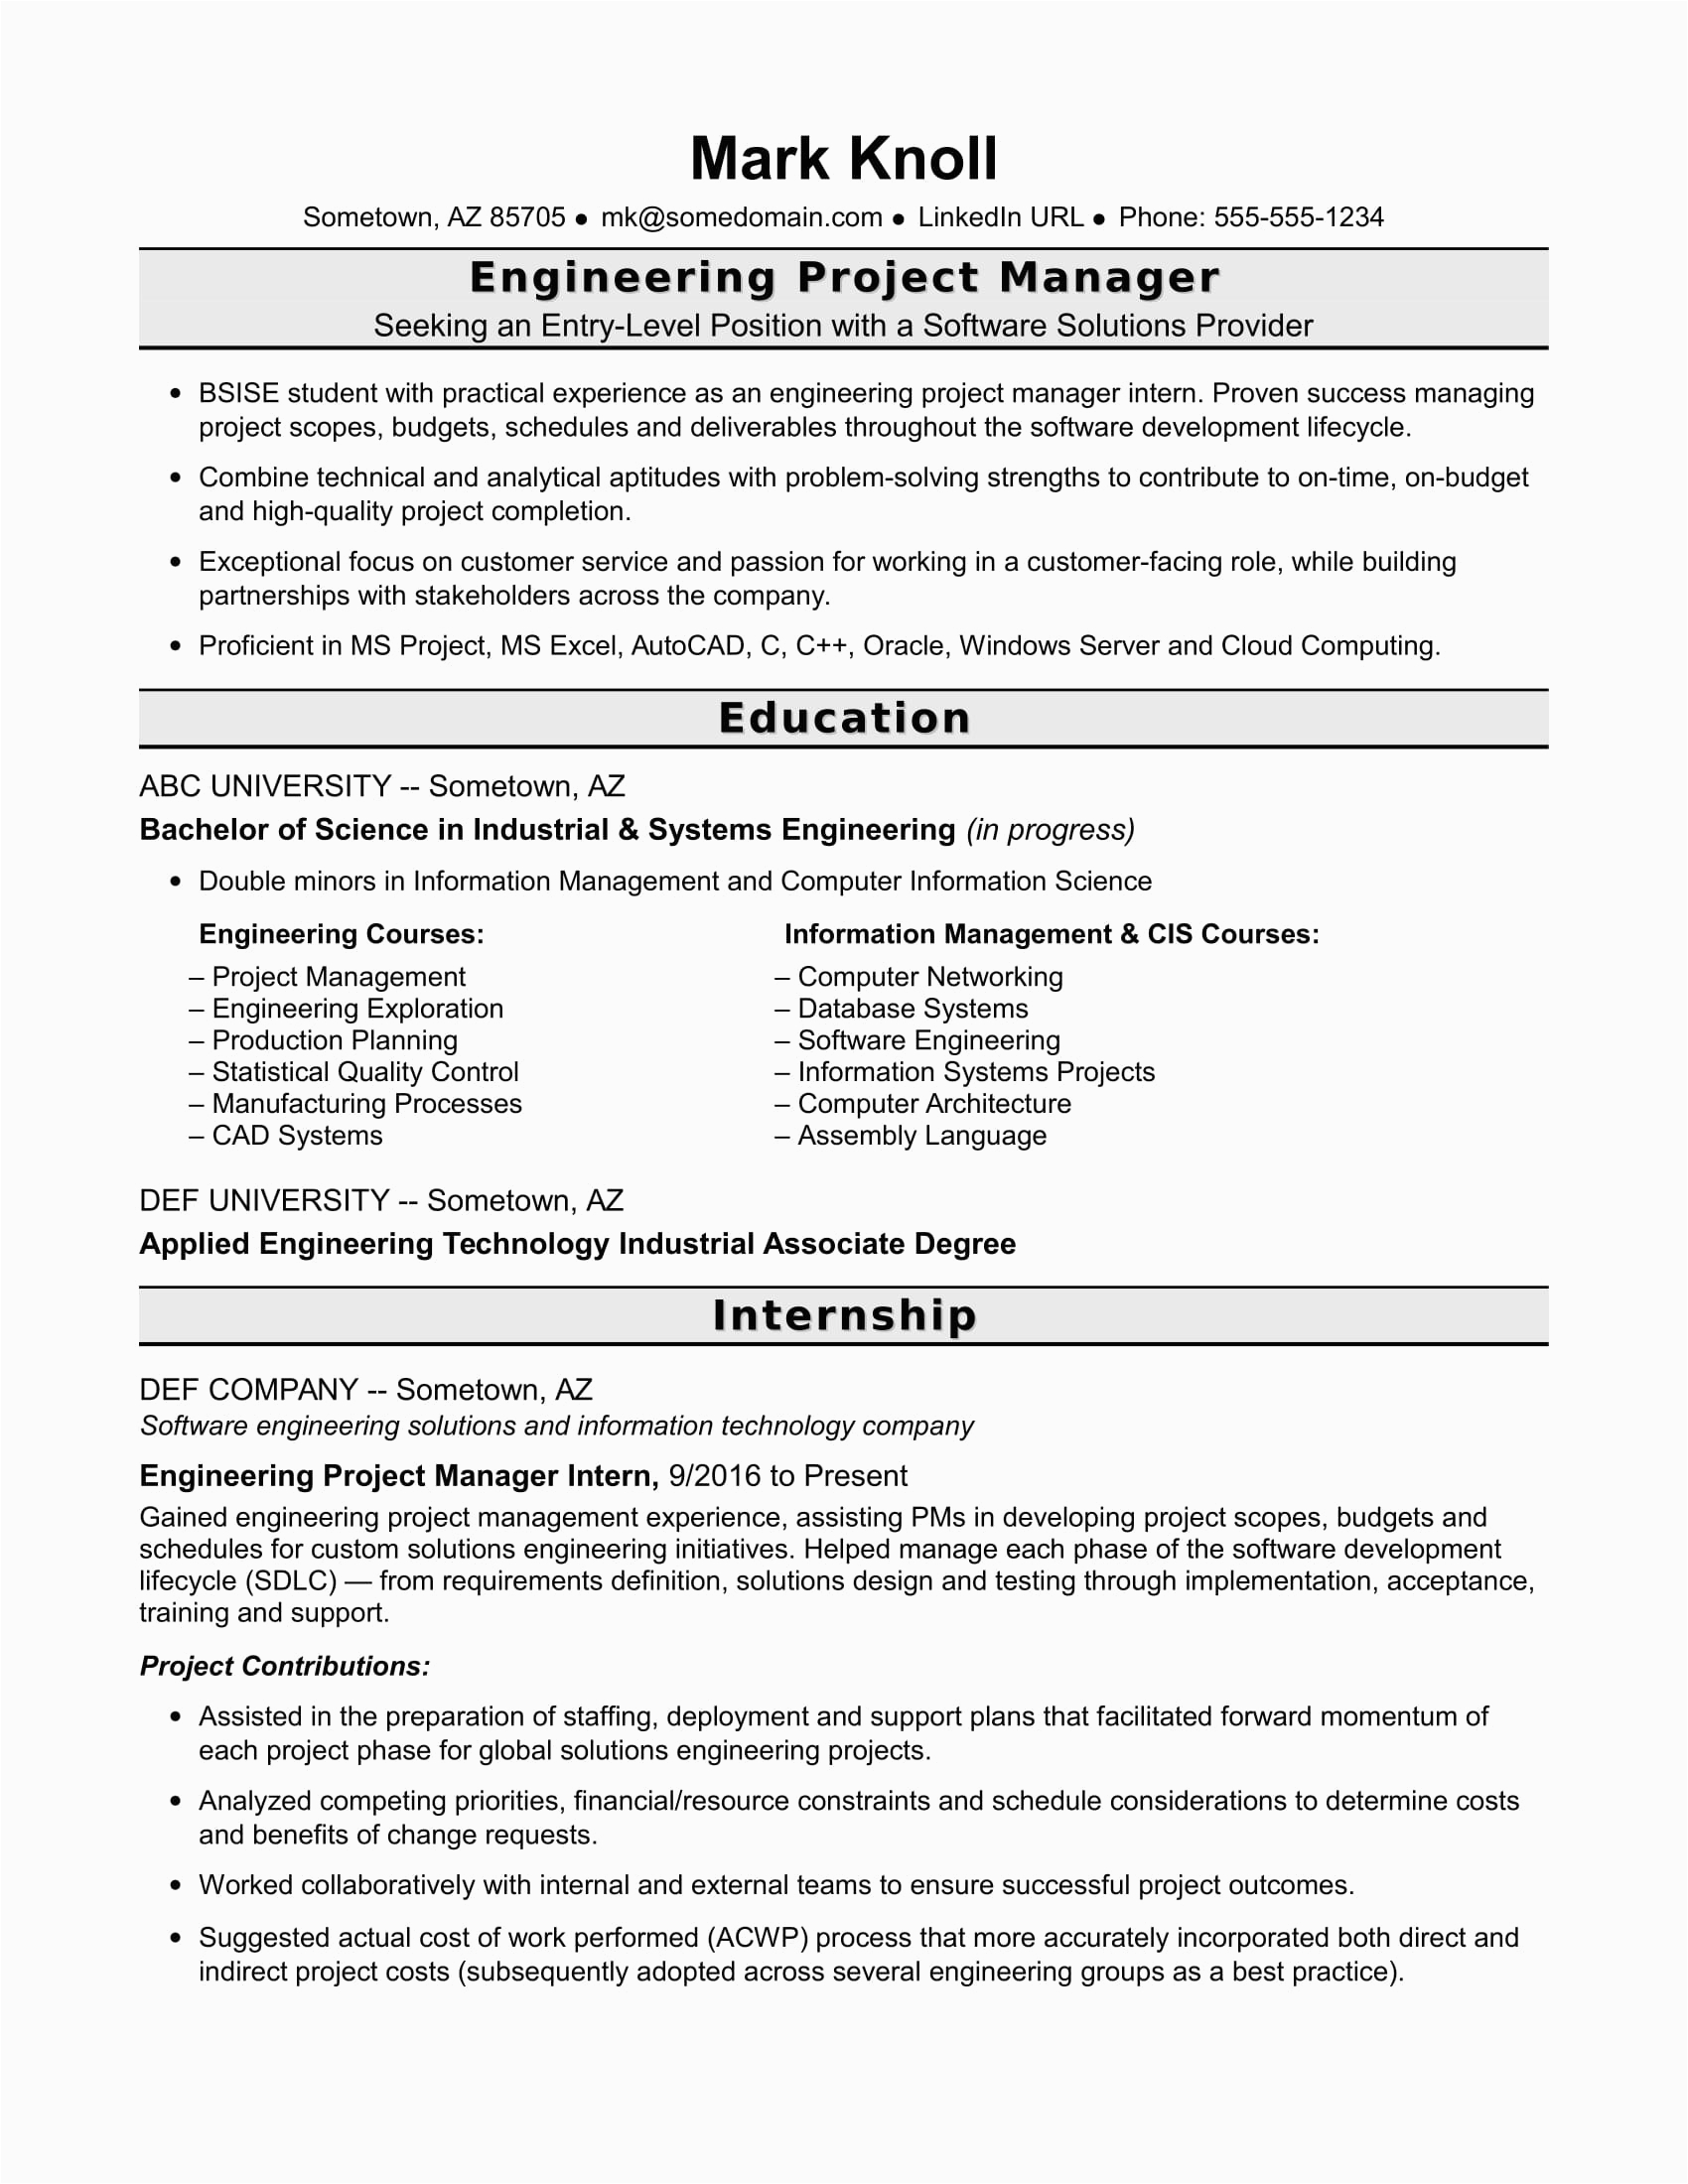 Entry Level Property Management Resume Samples Entry Level Project Manager Resume for Engineers